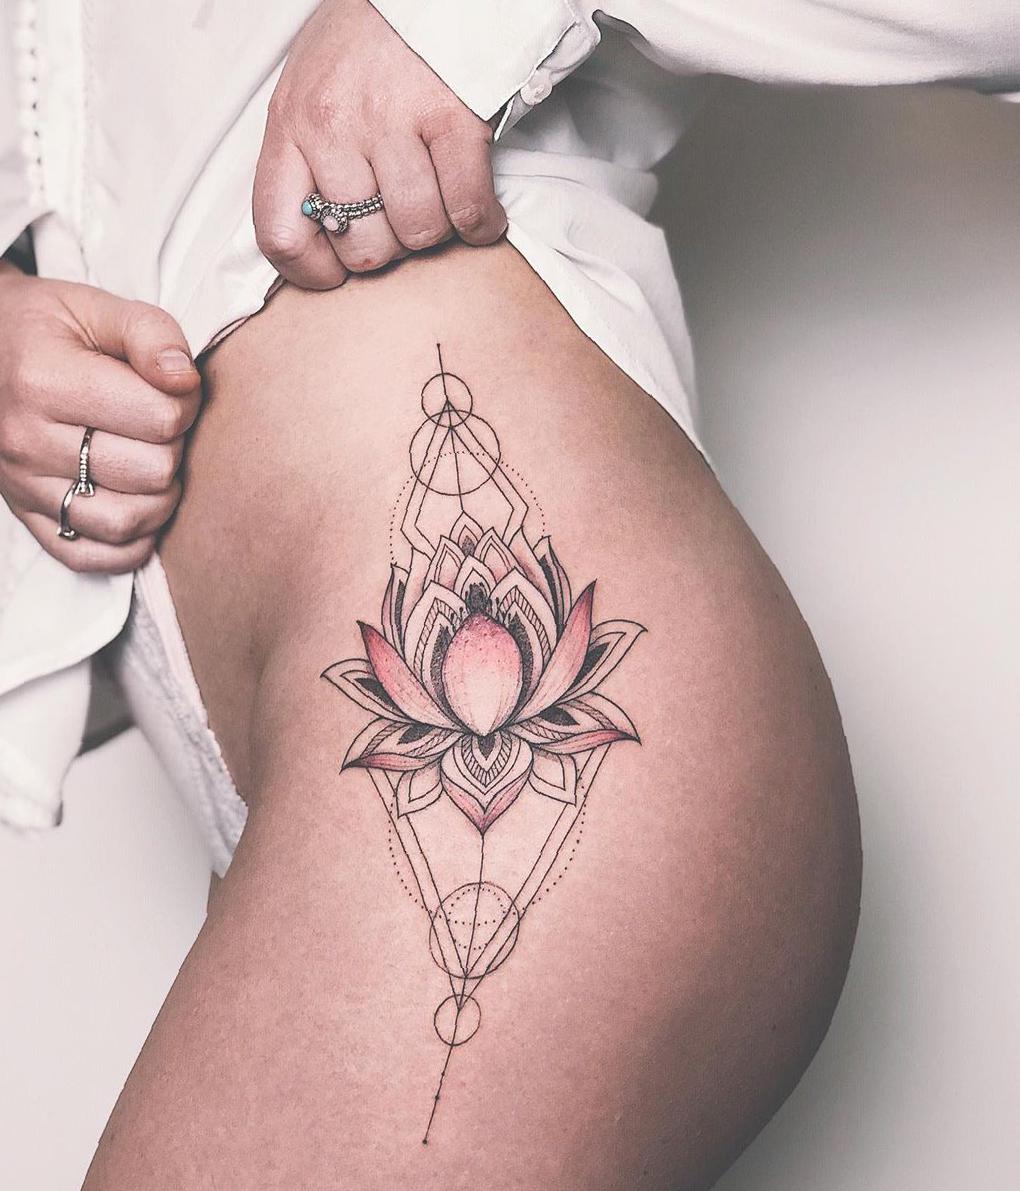 Best Leg Tattoo Idea Images for Women tattoo, tattoo images, leg tattoo, women tattoo, tattoo design